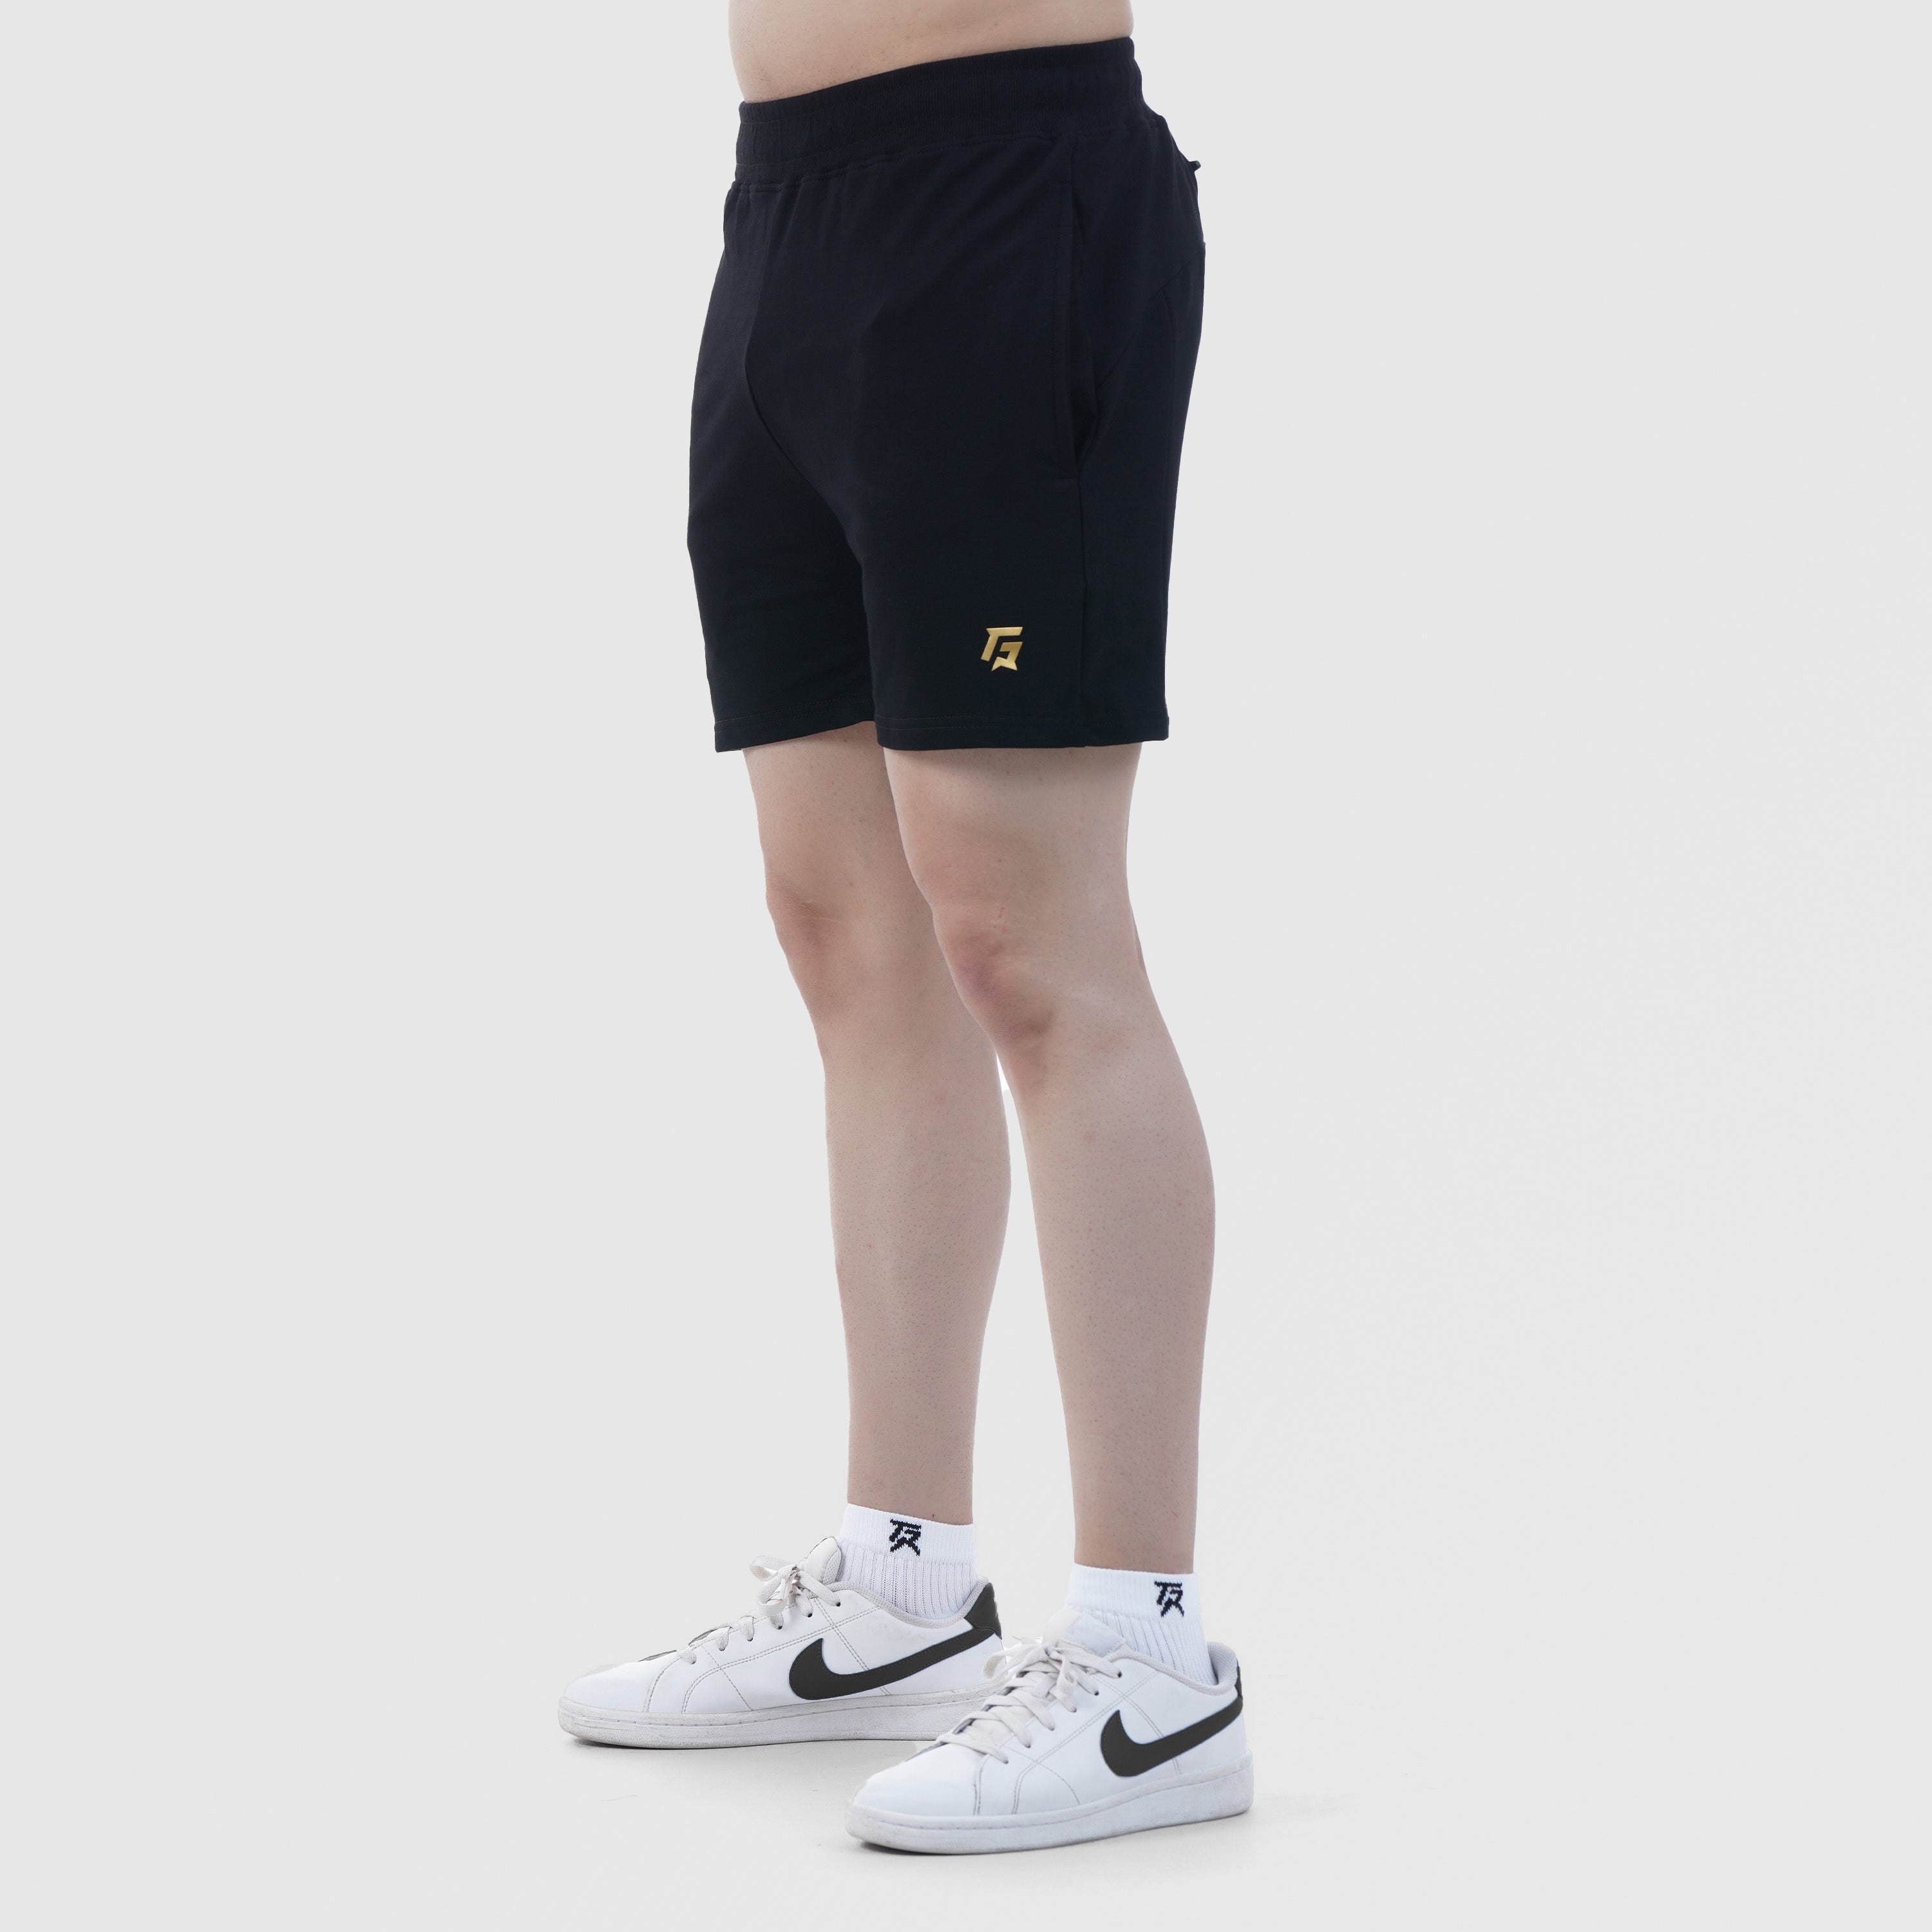 SpeedFlex Shorts (Black)